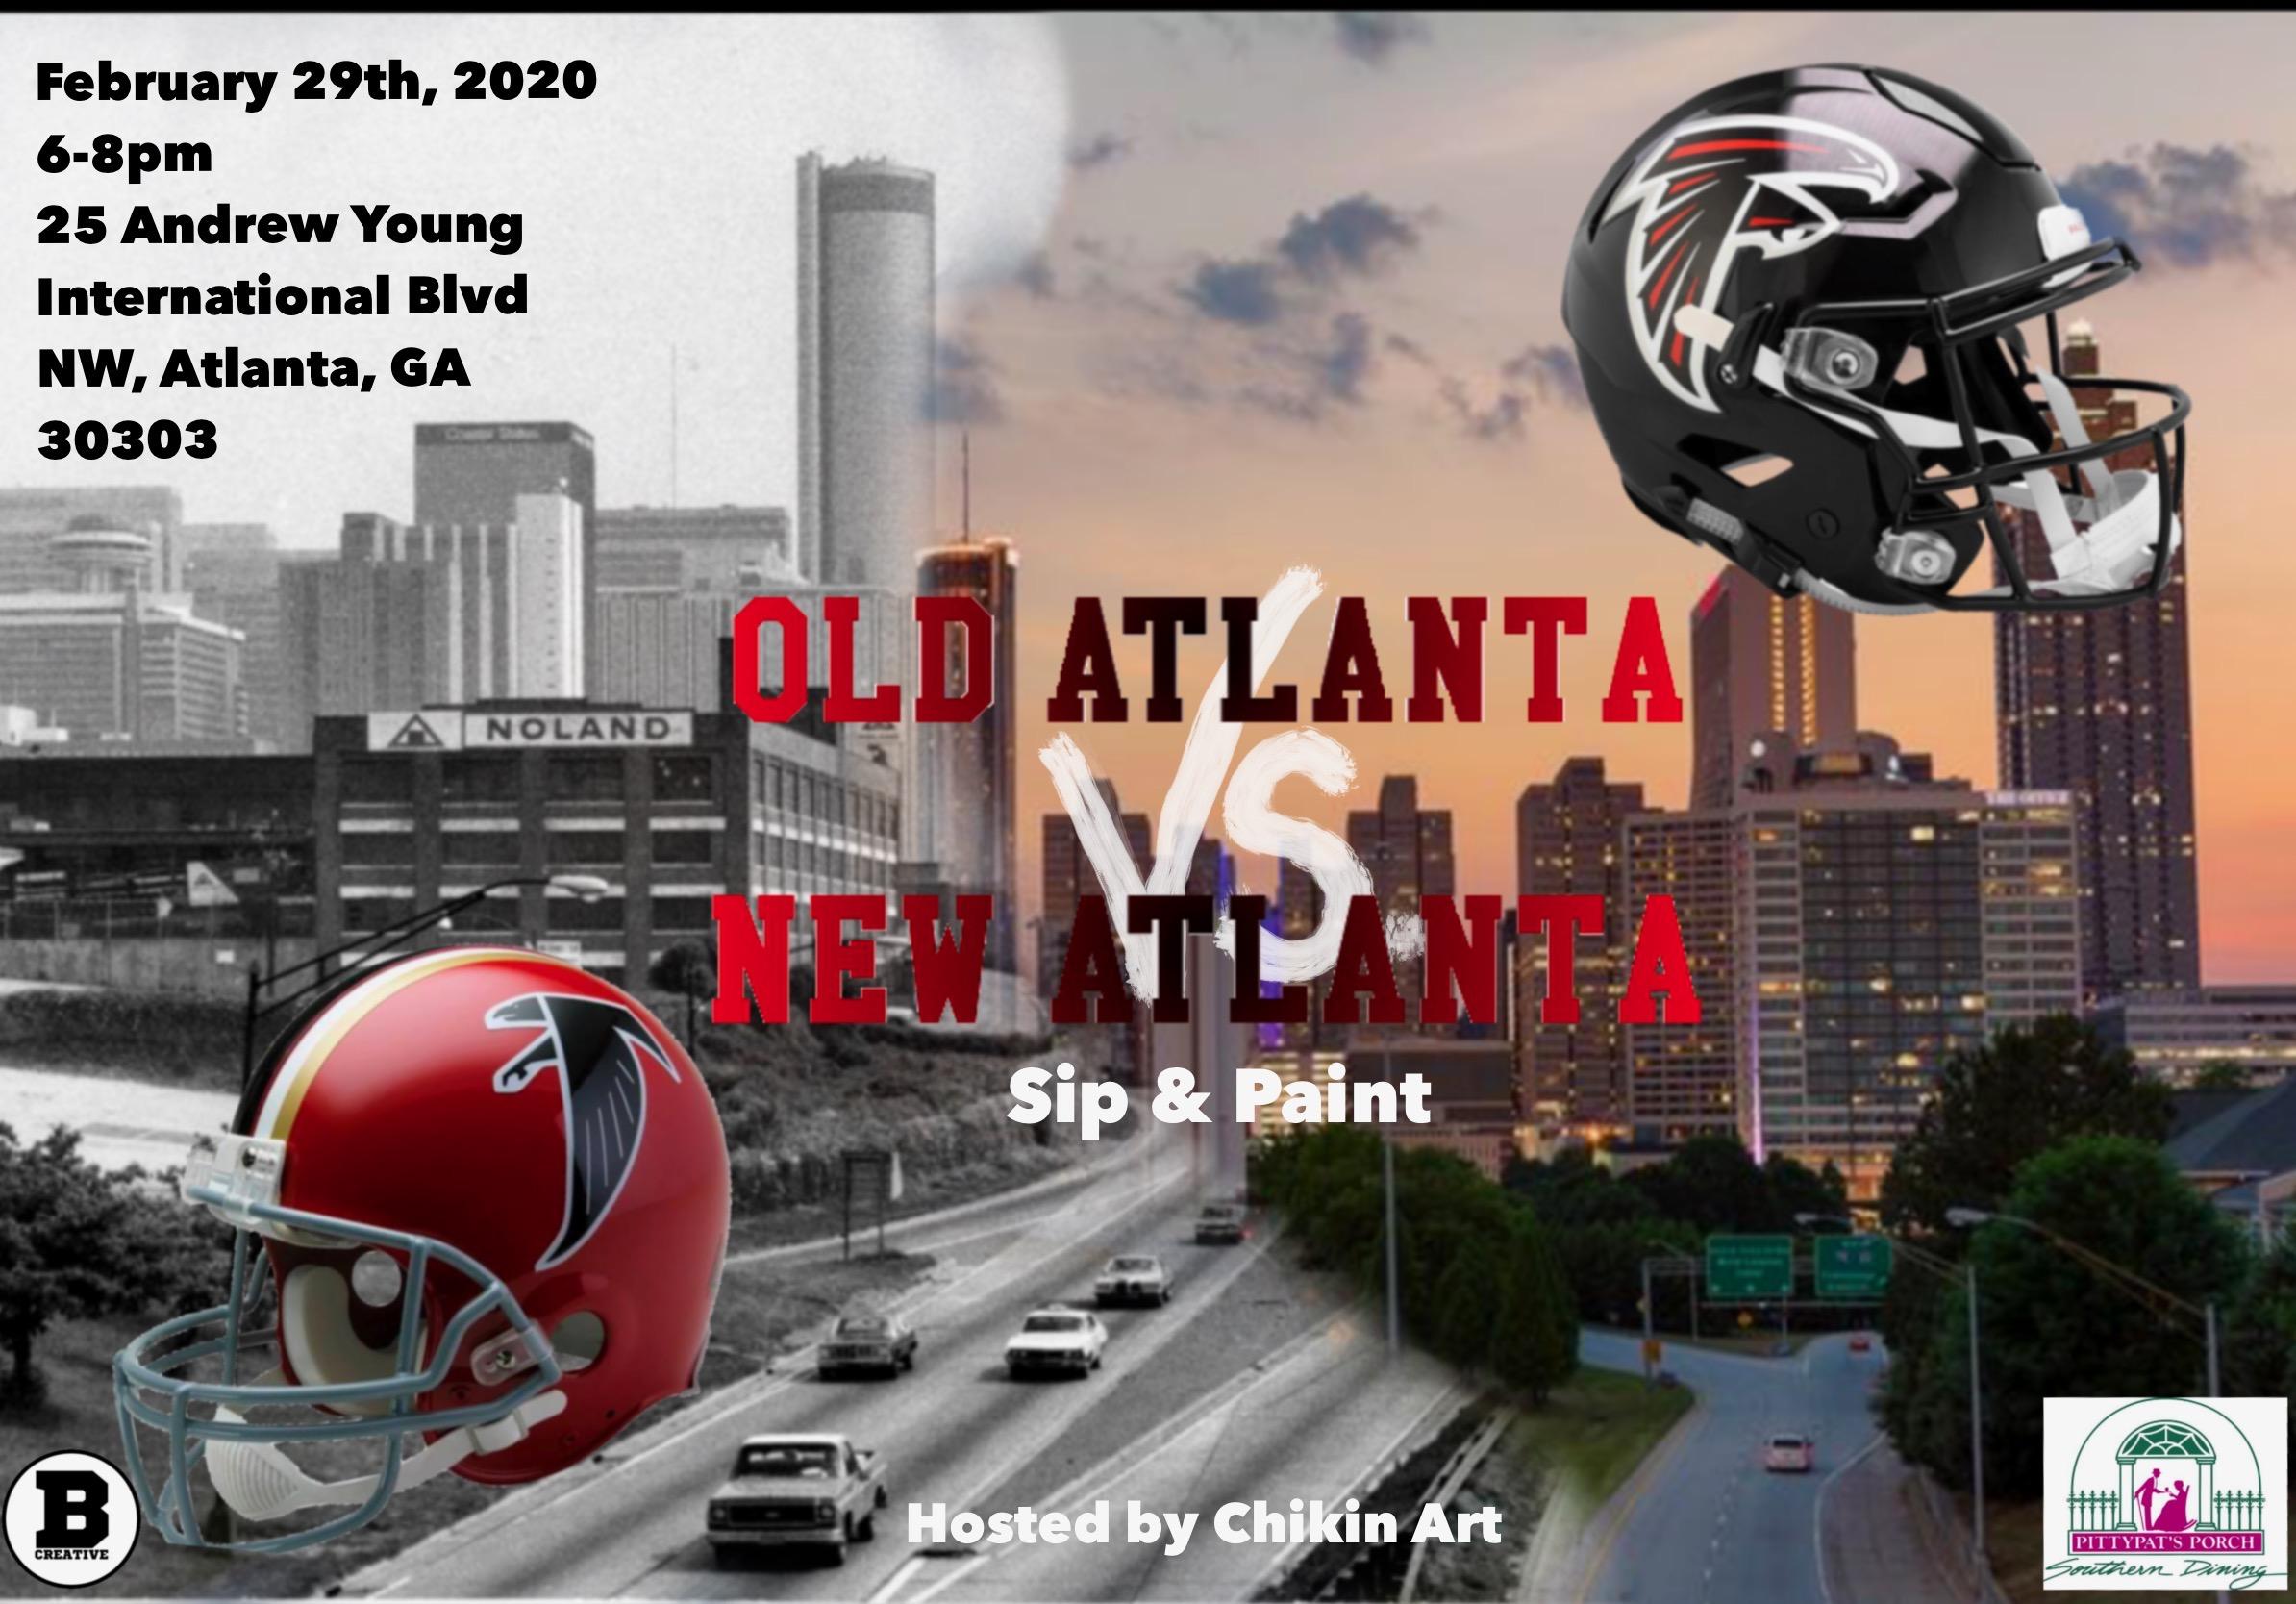 Old Atlanta VS. New Atlanta: Sip & Paint